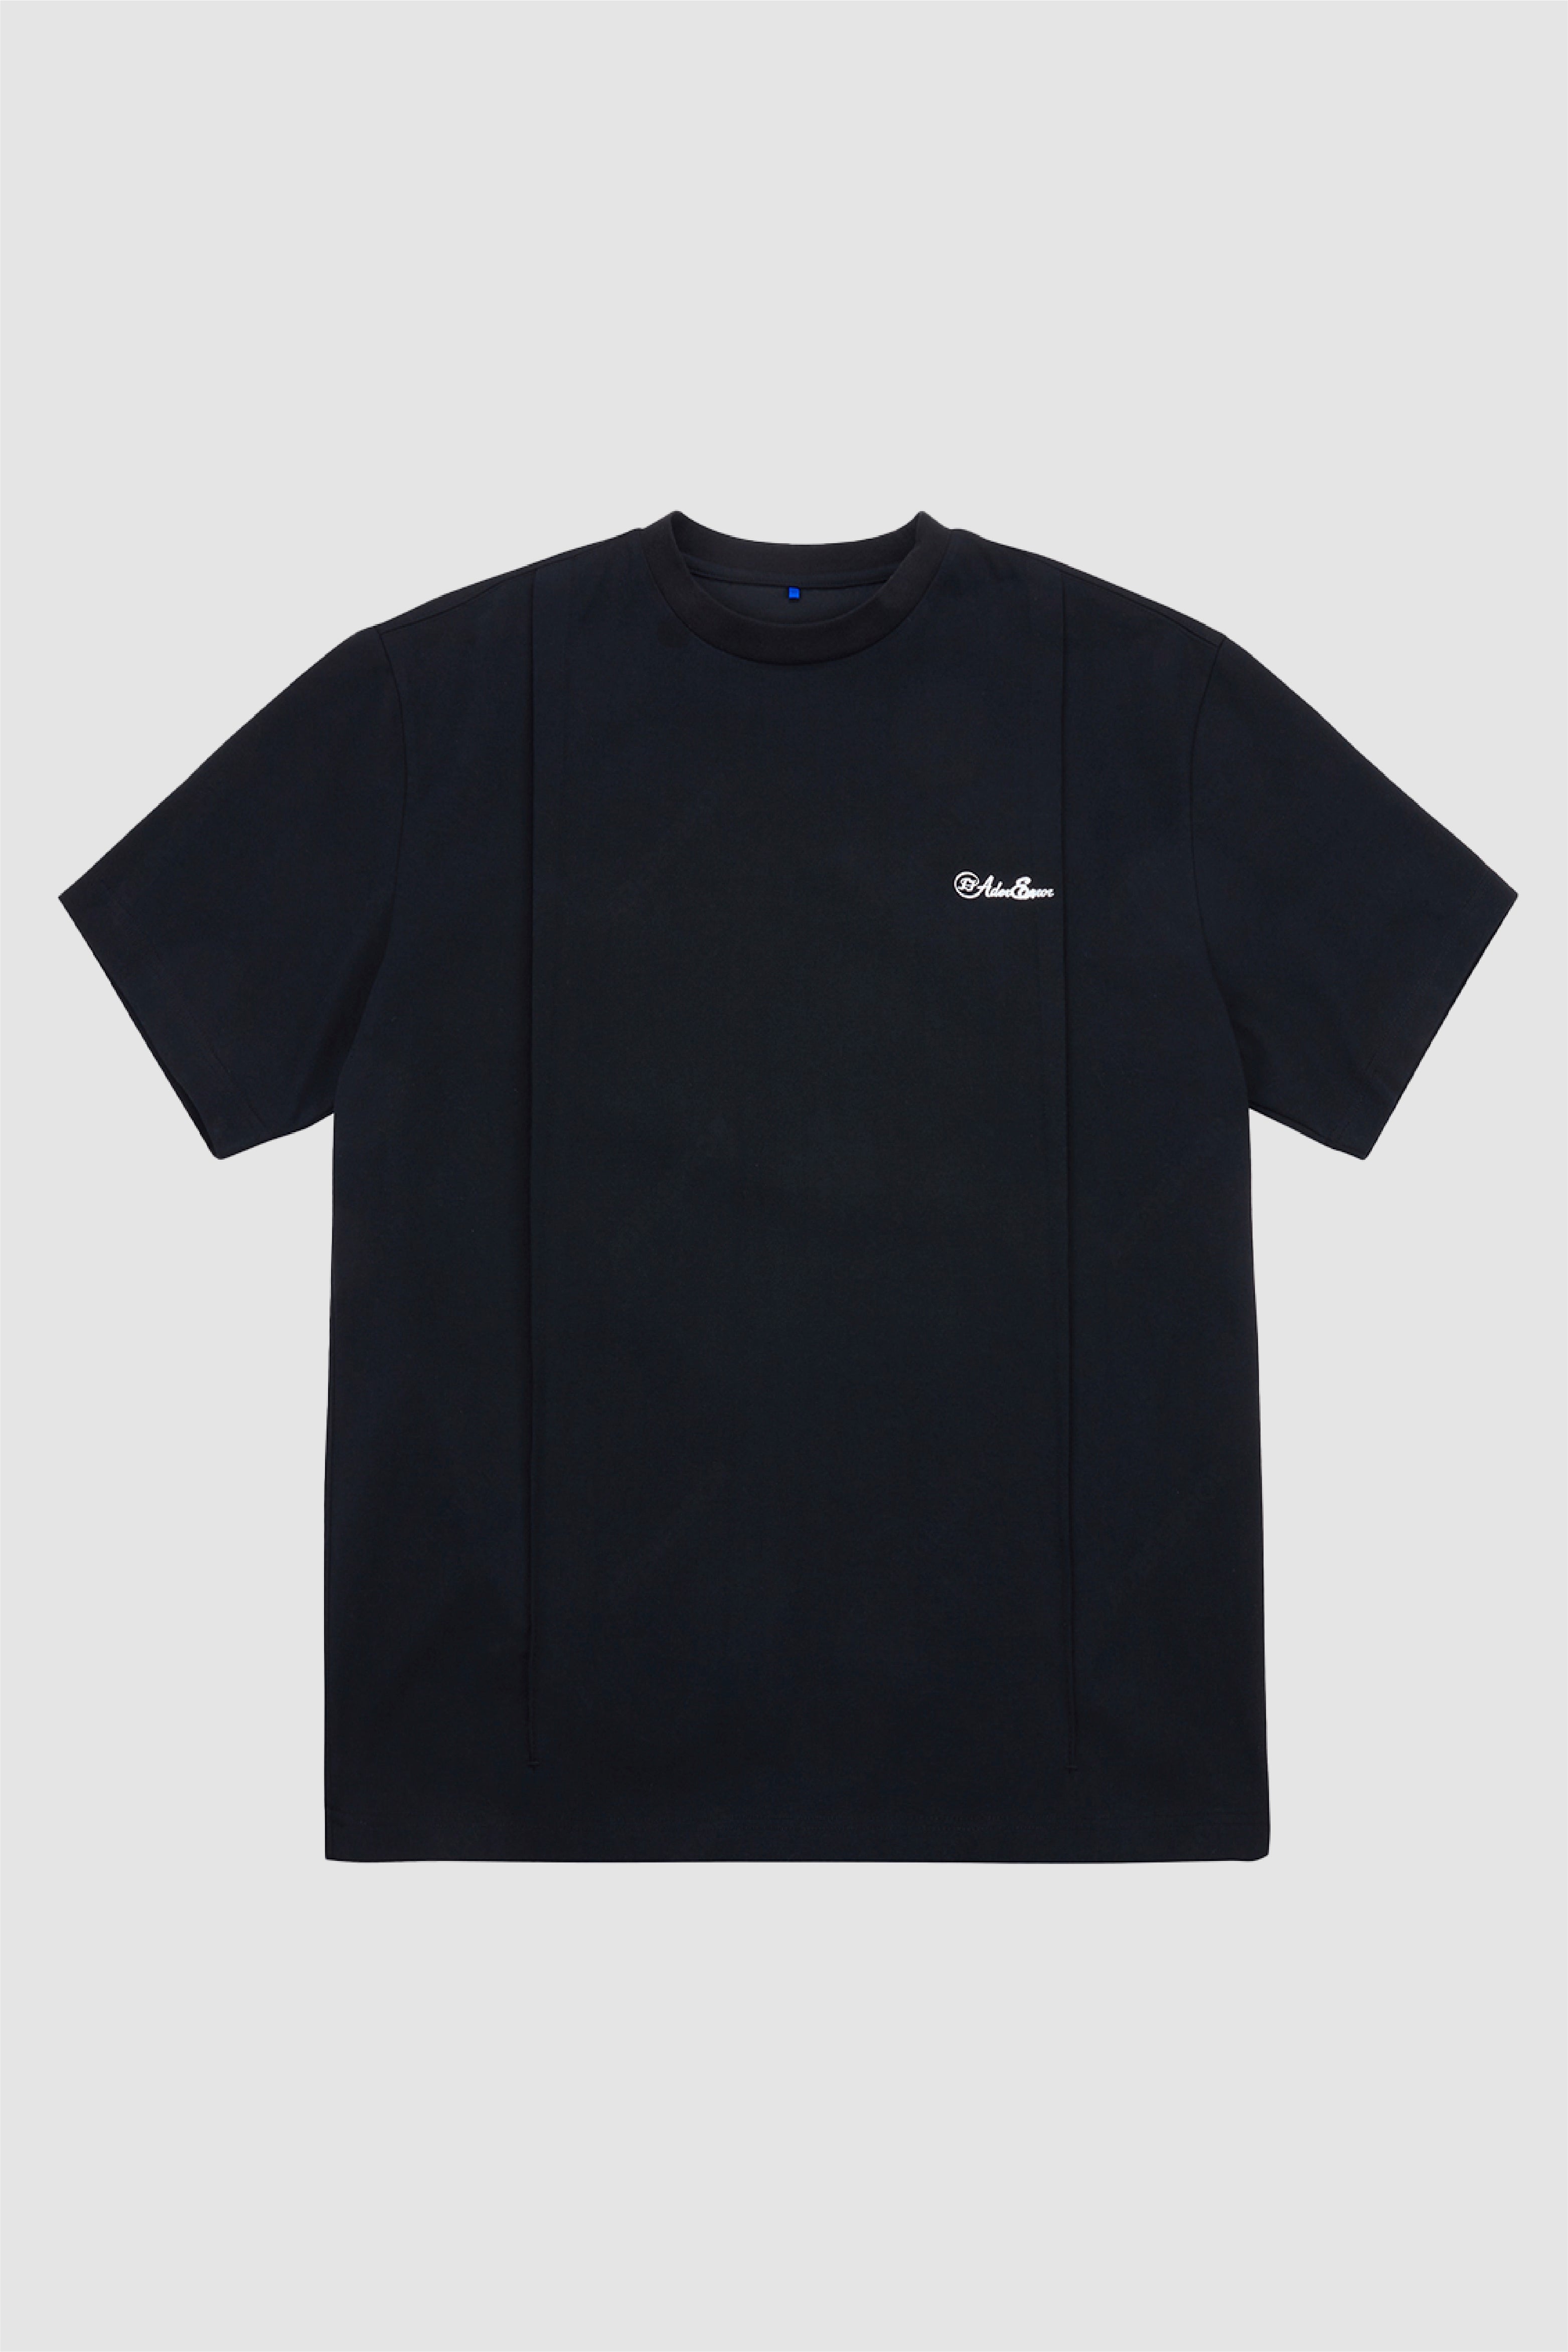 Selectshop FRAME - ADER ERROR T-Shirt T-Shirts Dubai